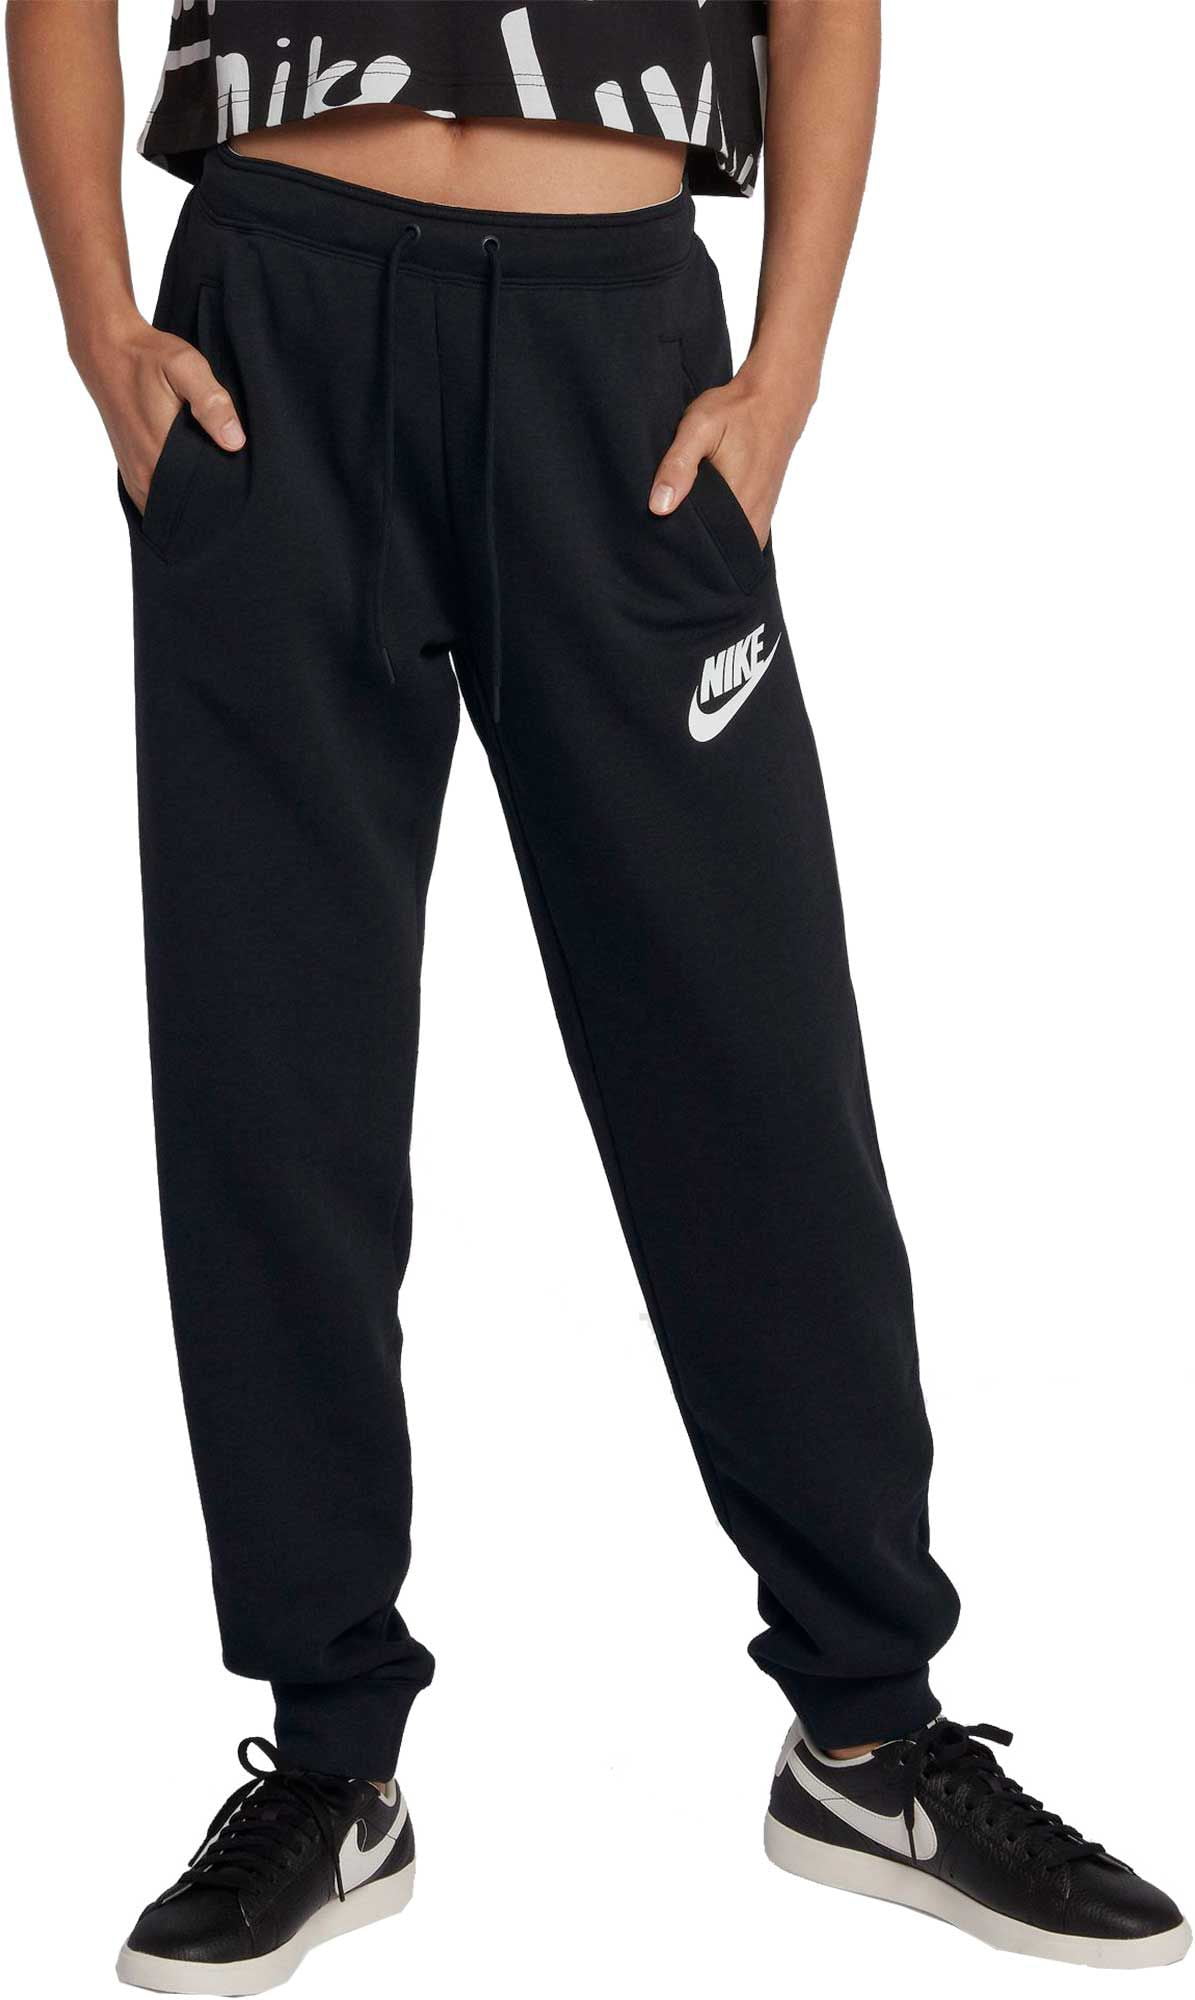 Nike Women's Joggers - Walmart.com